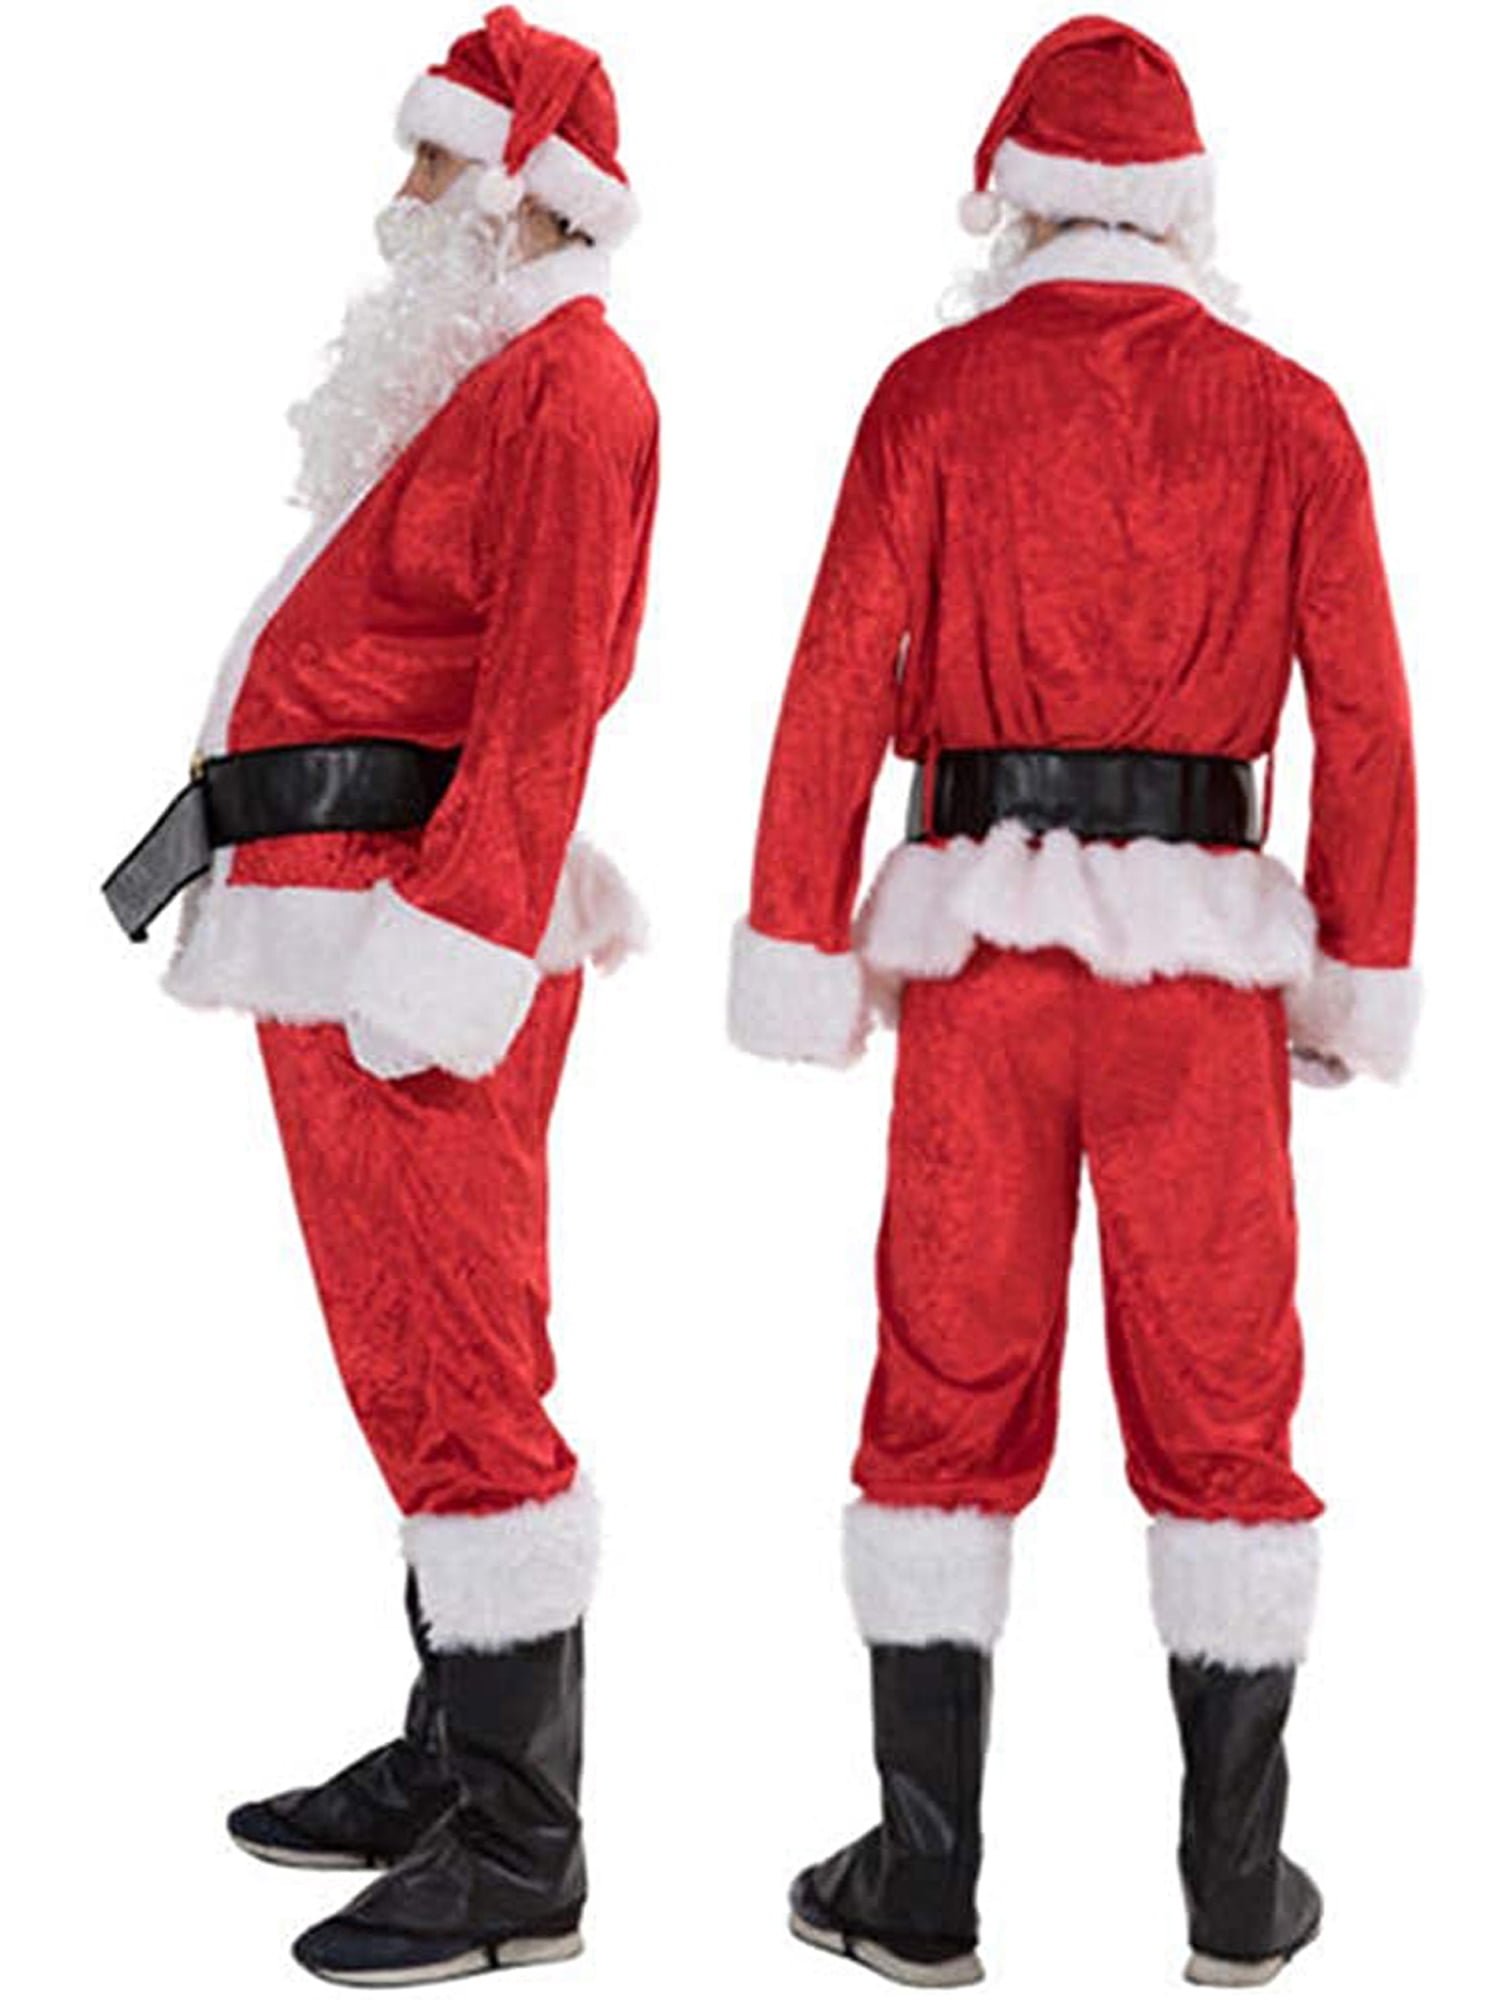 Details about   Santa Claus Costume Father Christmas Flannel Suit Mens Adult Fancy Dress Outfits 